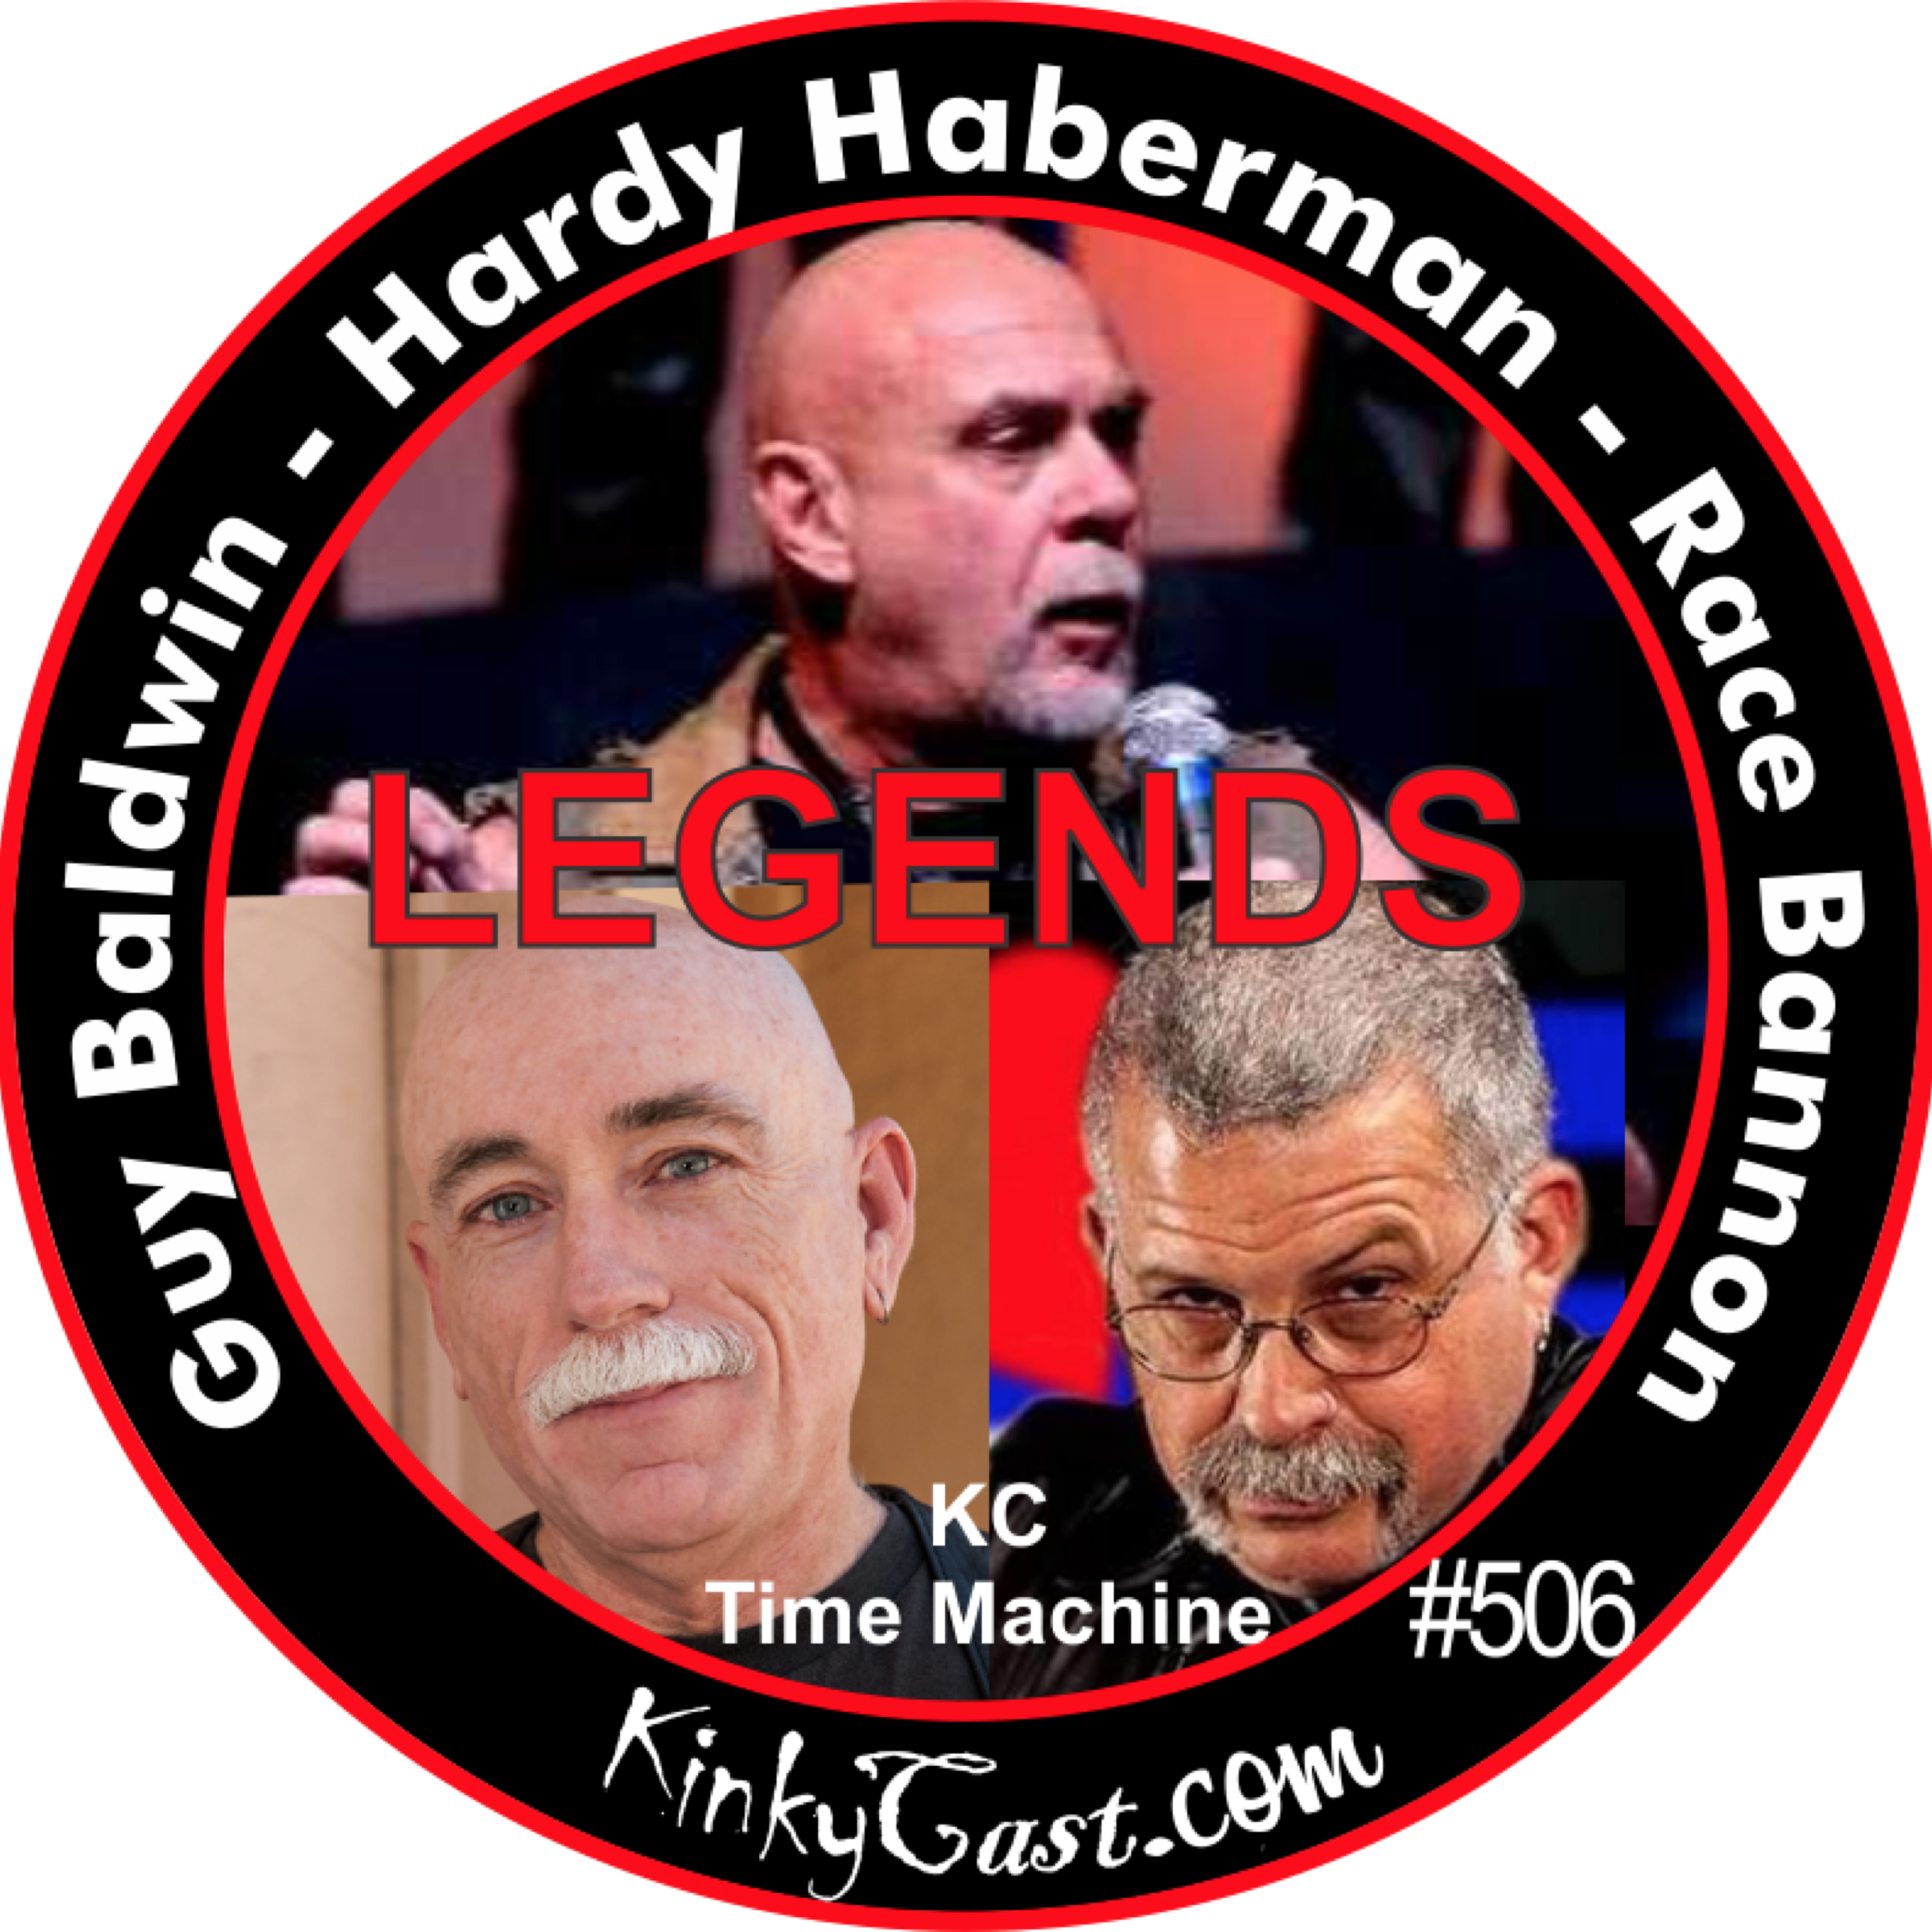 #506 - Guy Baldwin - Hardy Haberman - Race Bannon - Legends - KC Time Machine#506 - Guy Baldwin - Hardy Haberman - Race Bannon - Legends - KC Time Machine#506 - Guy Baldwin - Hardy Haberman - Race Ban